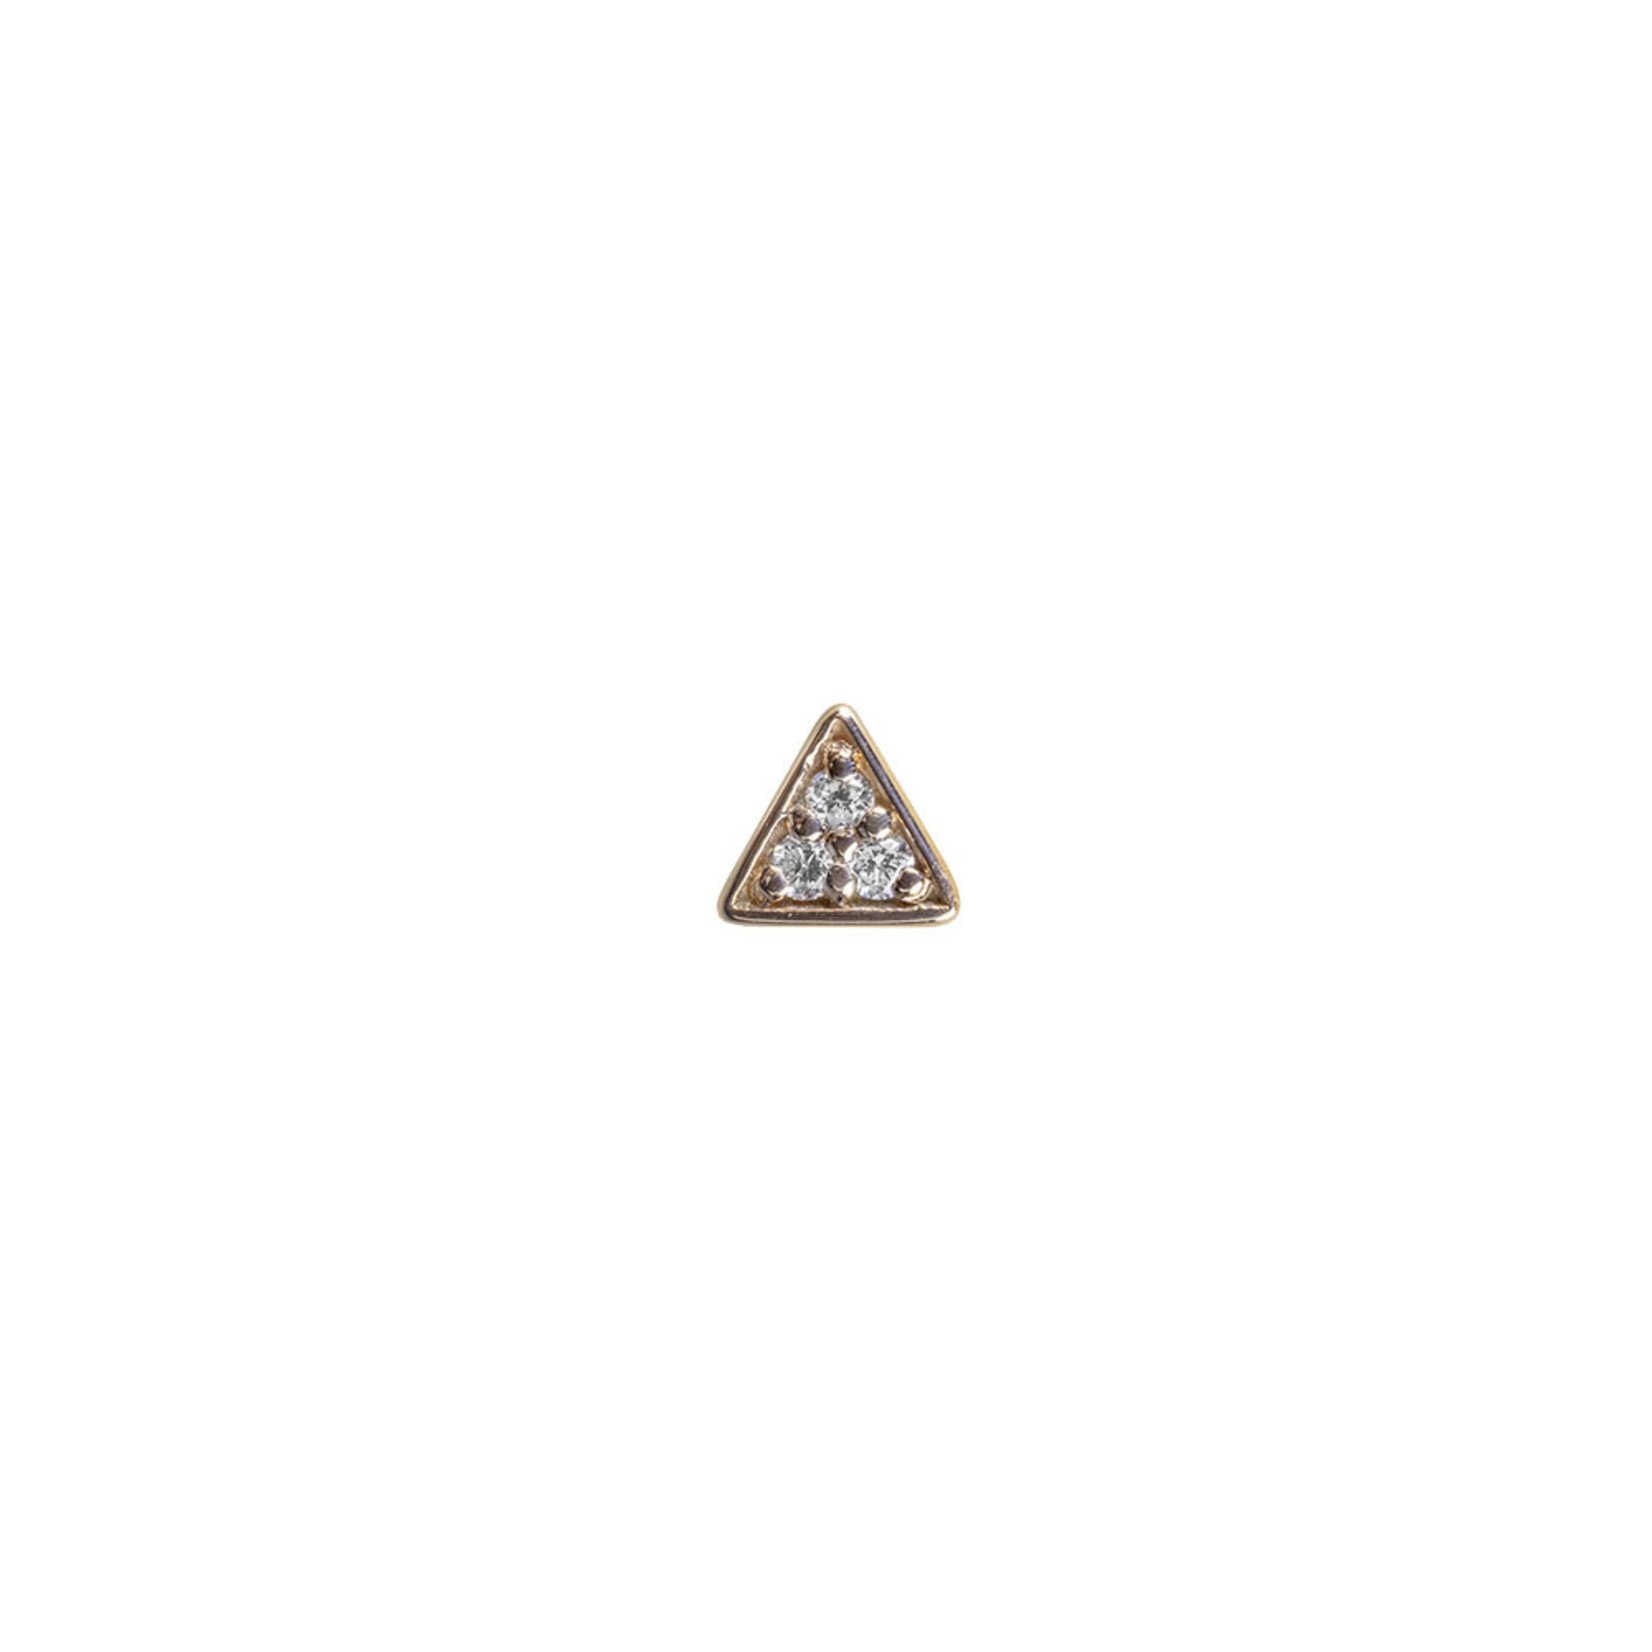 BVLA BVLA 4.0 "Micro Pave Triangle press fit end with 3x 1.0 VS1 diamond